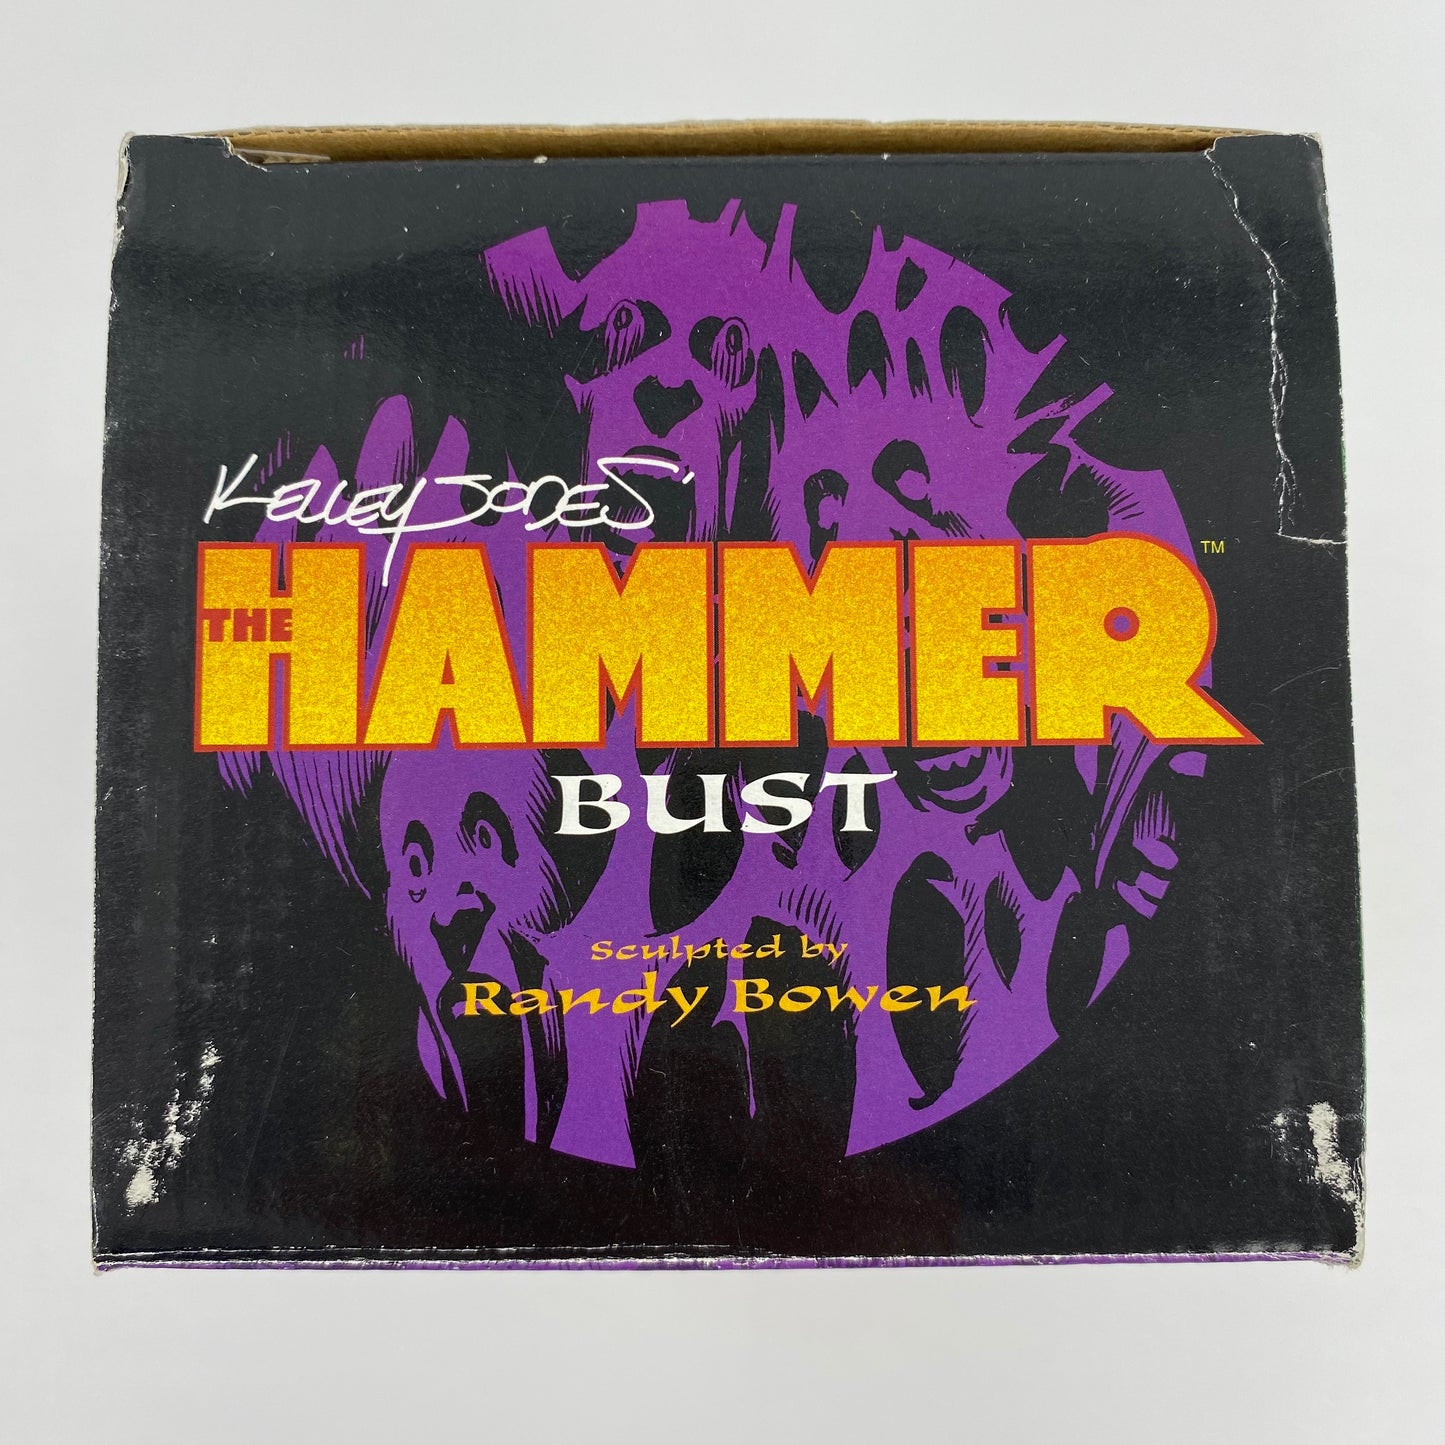 The Hammer mini-bust (1999) Bowen Designs